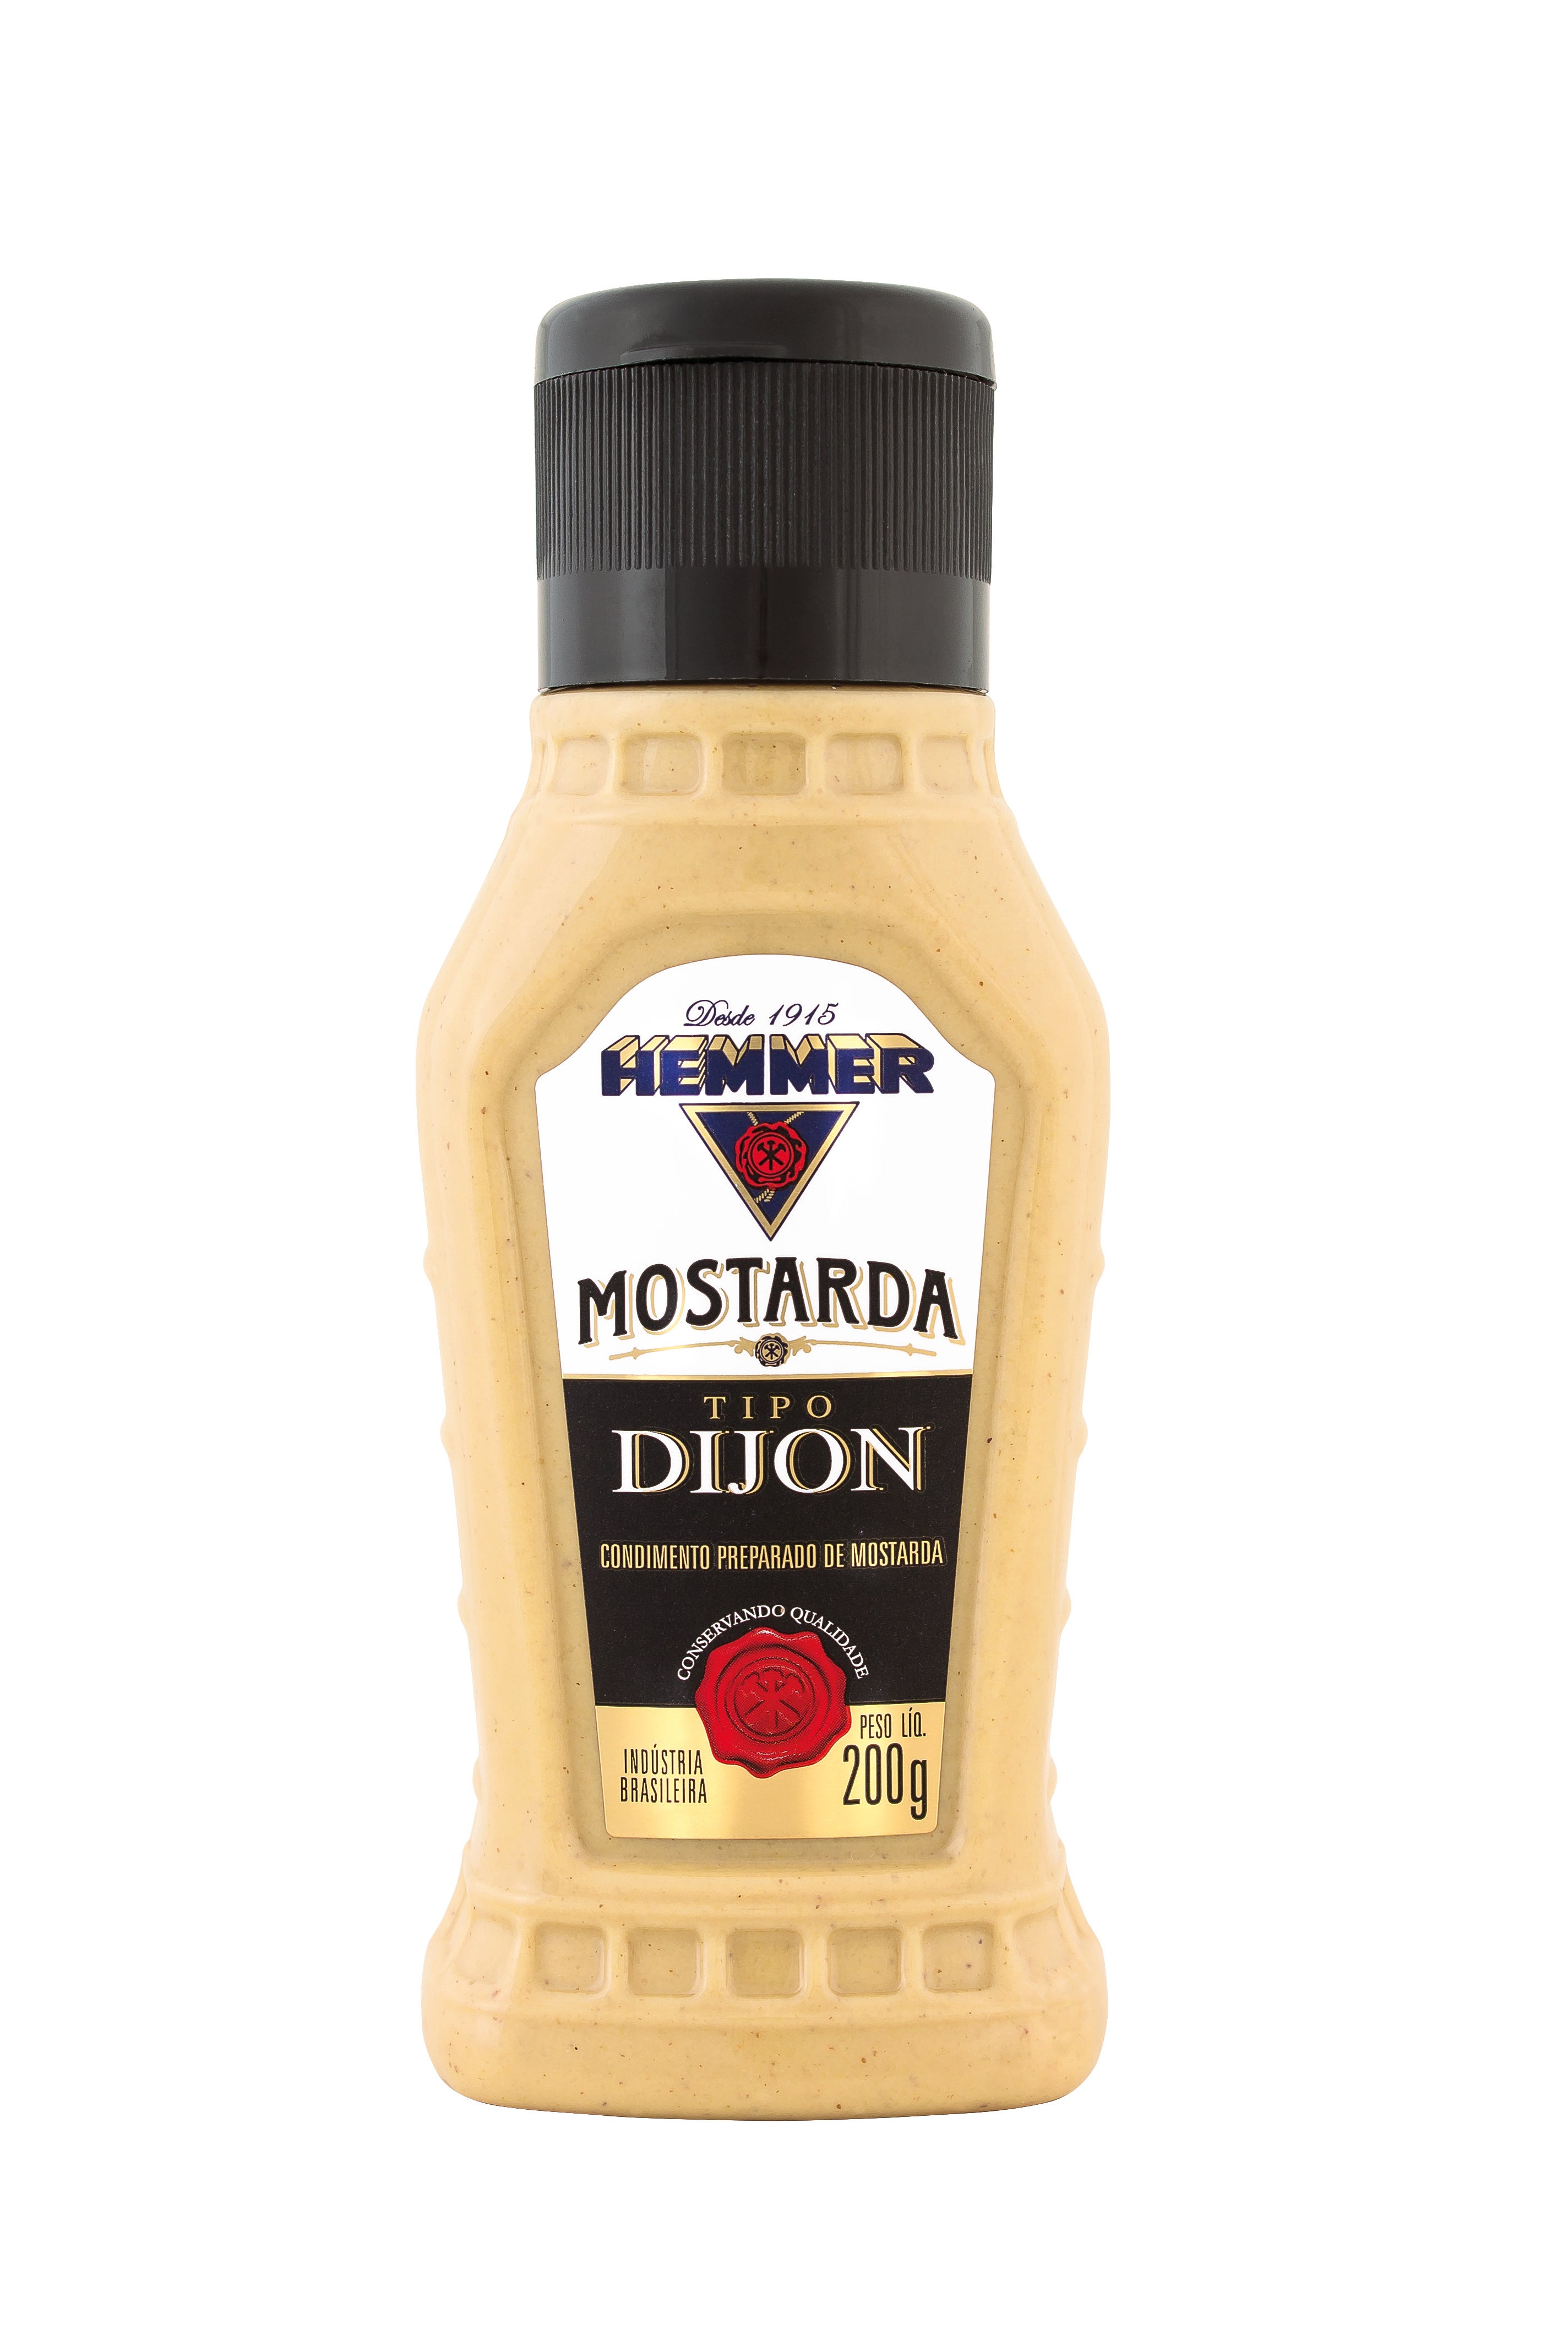 HEMMER - Dijon mustard - 200g - FINAL SALE - EXPIRED or CLOSE TO EXPIRY